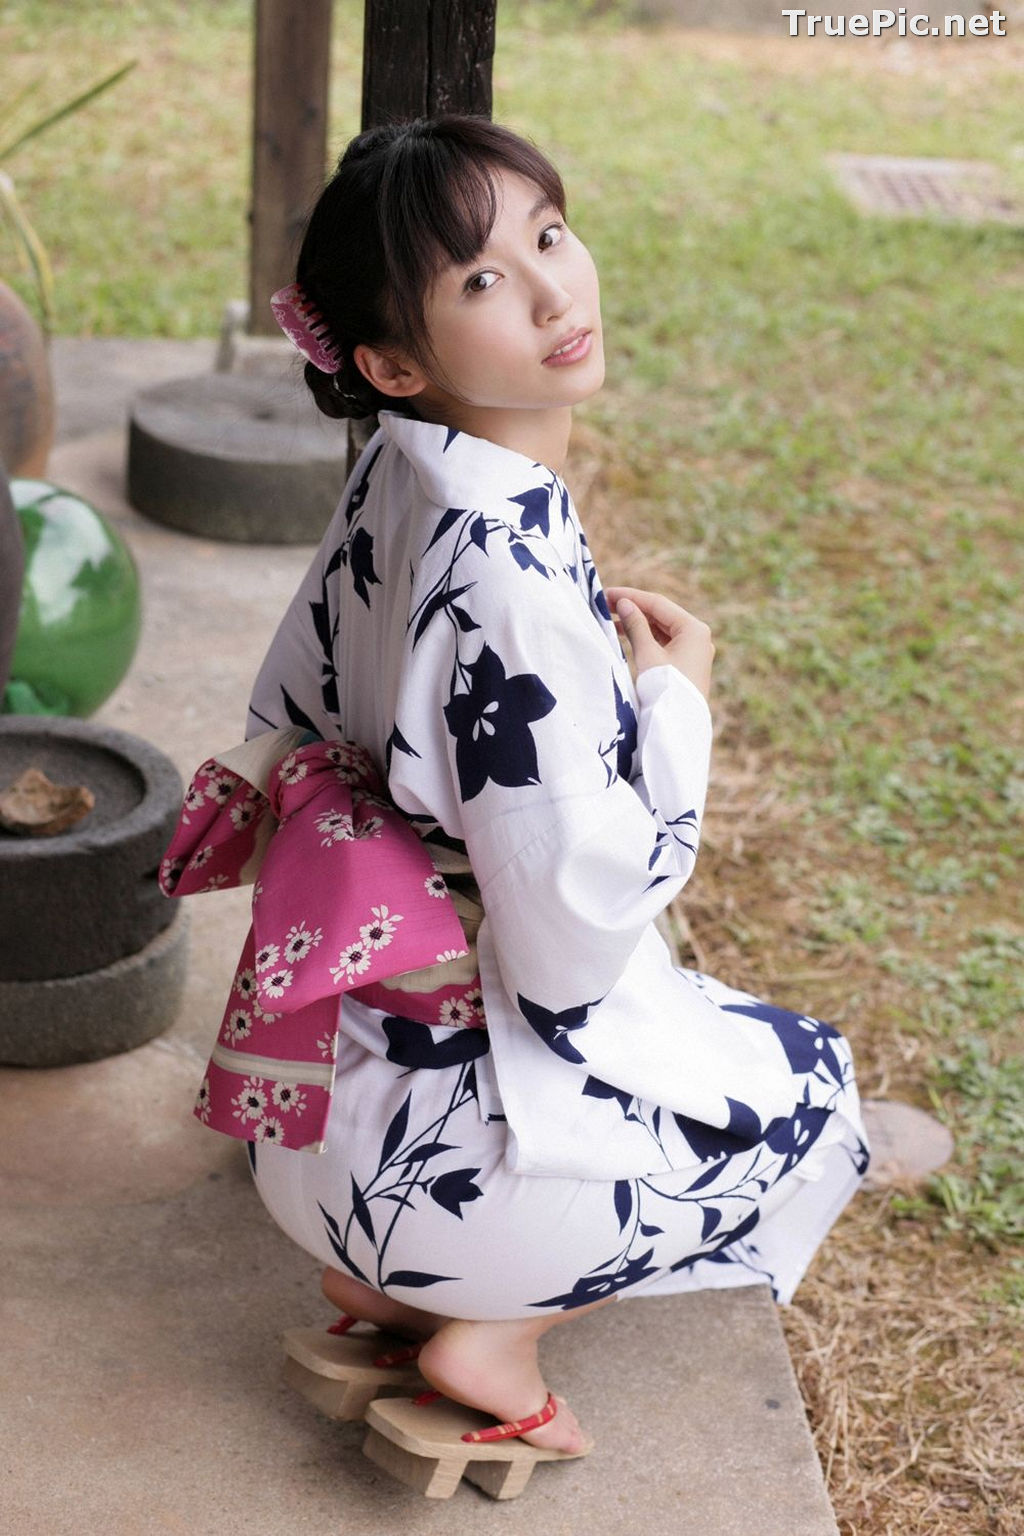 Image [YS Web] Vol.527 - Japanese Gravure Idol and Singer - Risa Yoshiki - TruePic.net - Picture-24